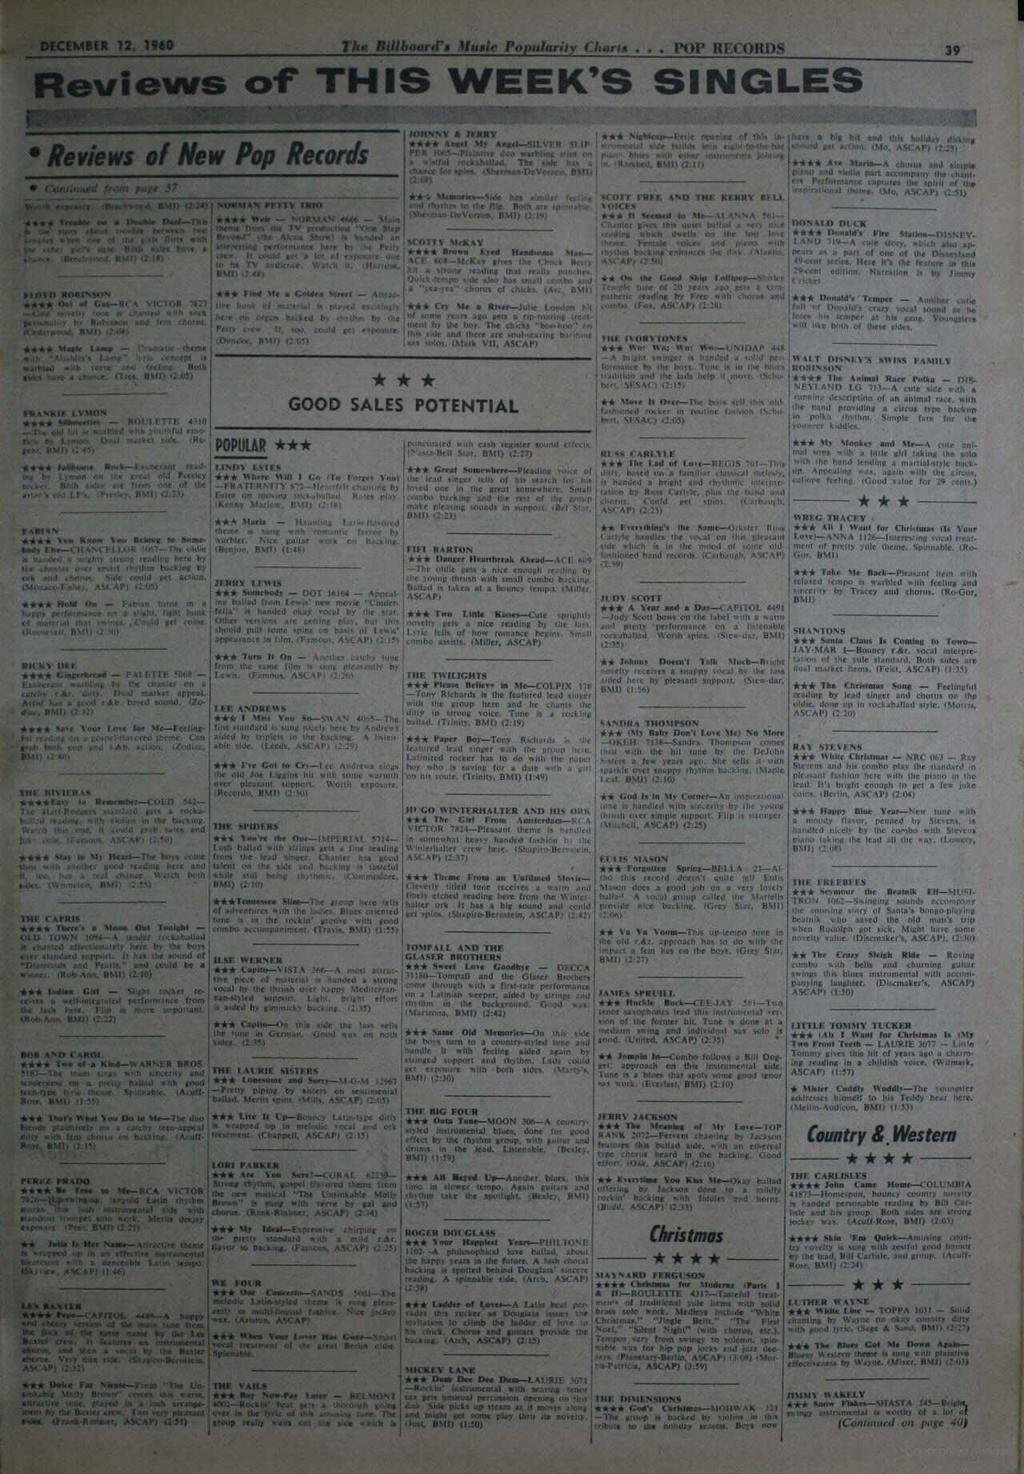 DECEMBER 12, 1960 The Billboard's Music Popularity l:barts... POP RECnRi)S 39 Reviews of THIS WEEK'S SINGLES r Reviews of New Pop Records r.,suinased tren part 37 }.,. rsrware,. tl/ttafi..ocd.